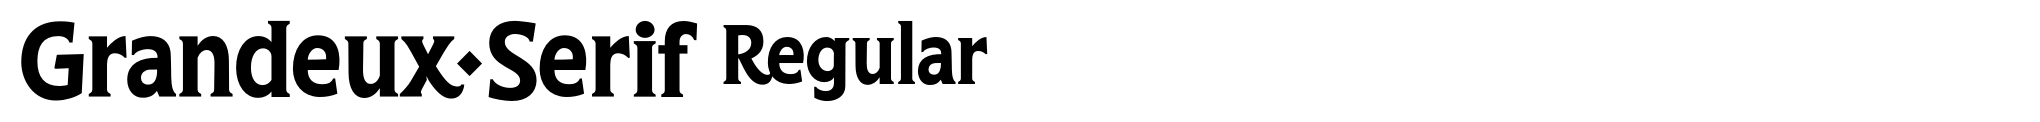 Grandeux Serif Regular image